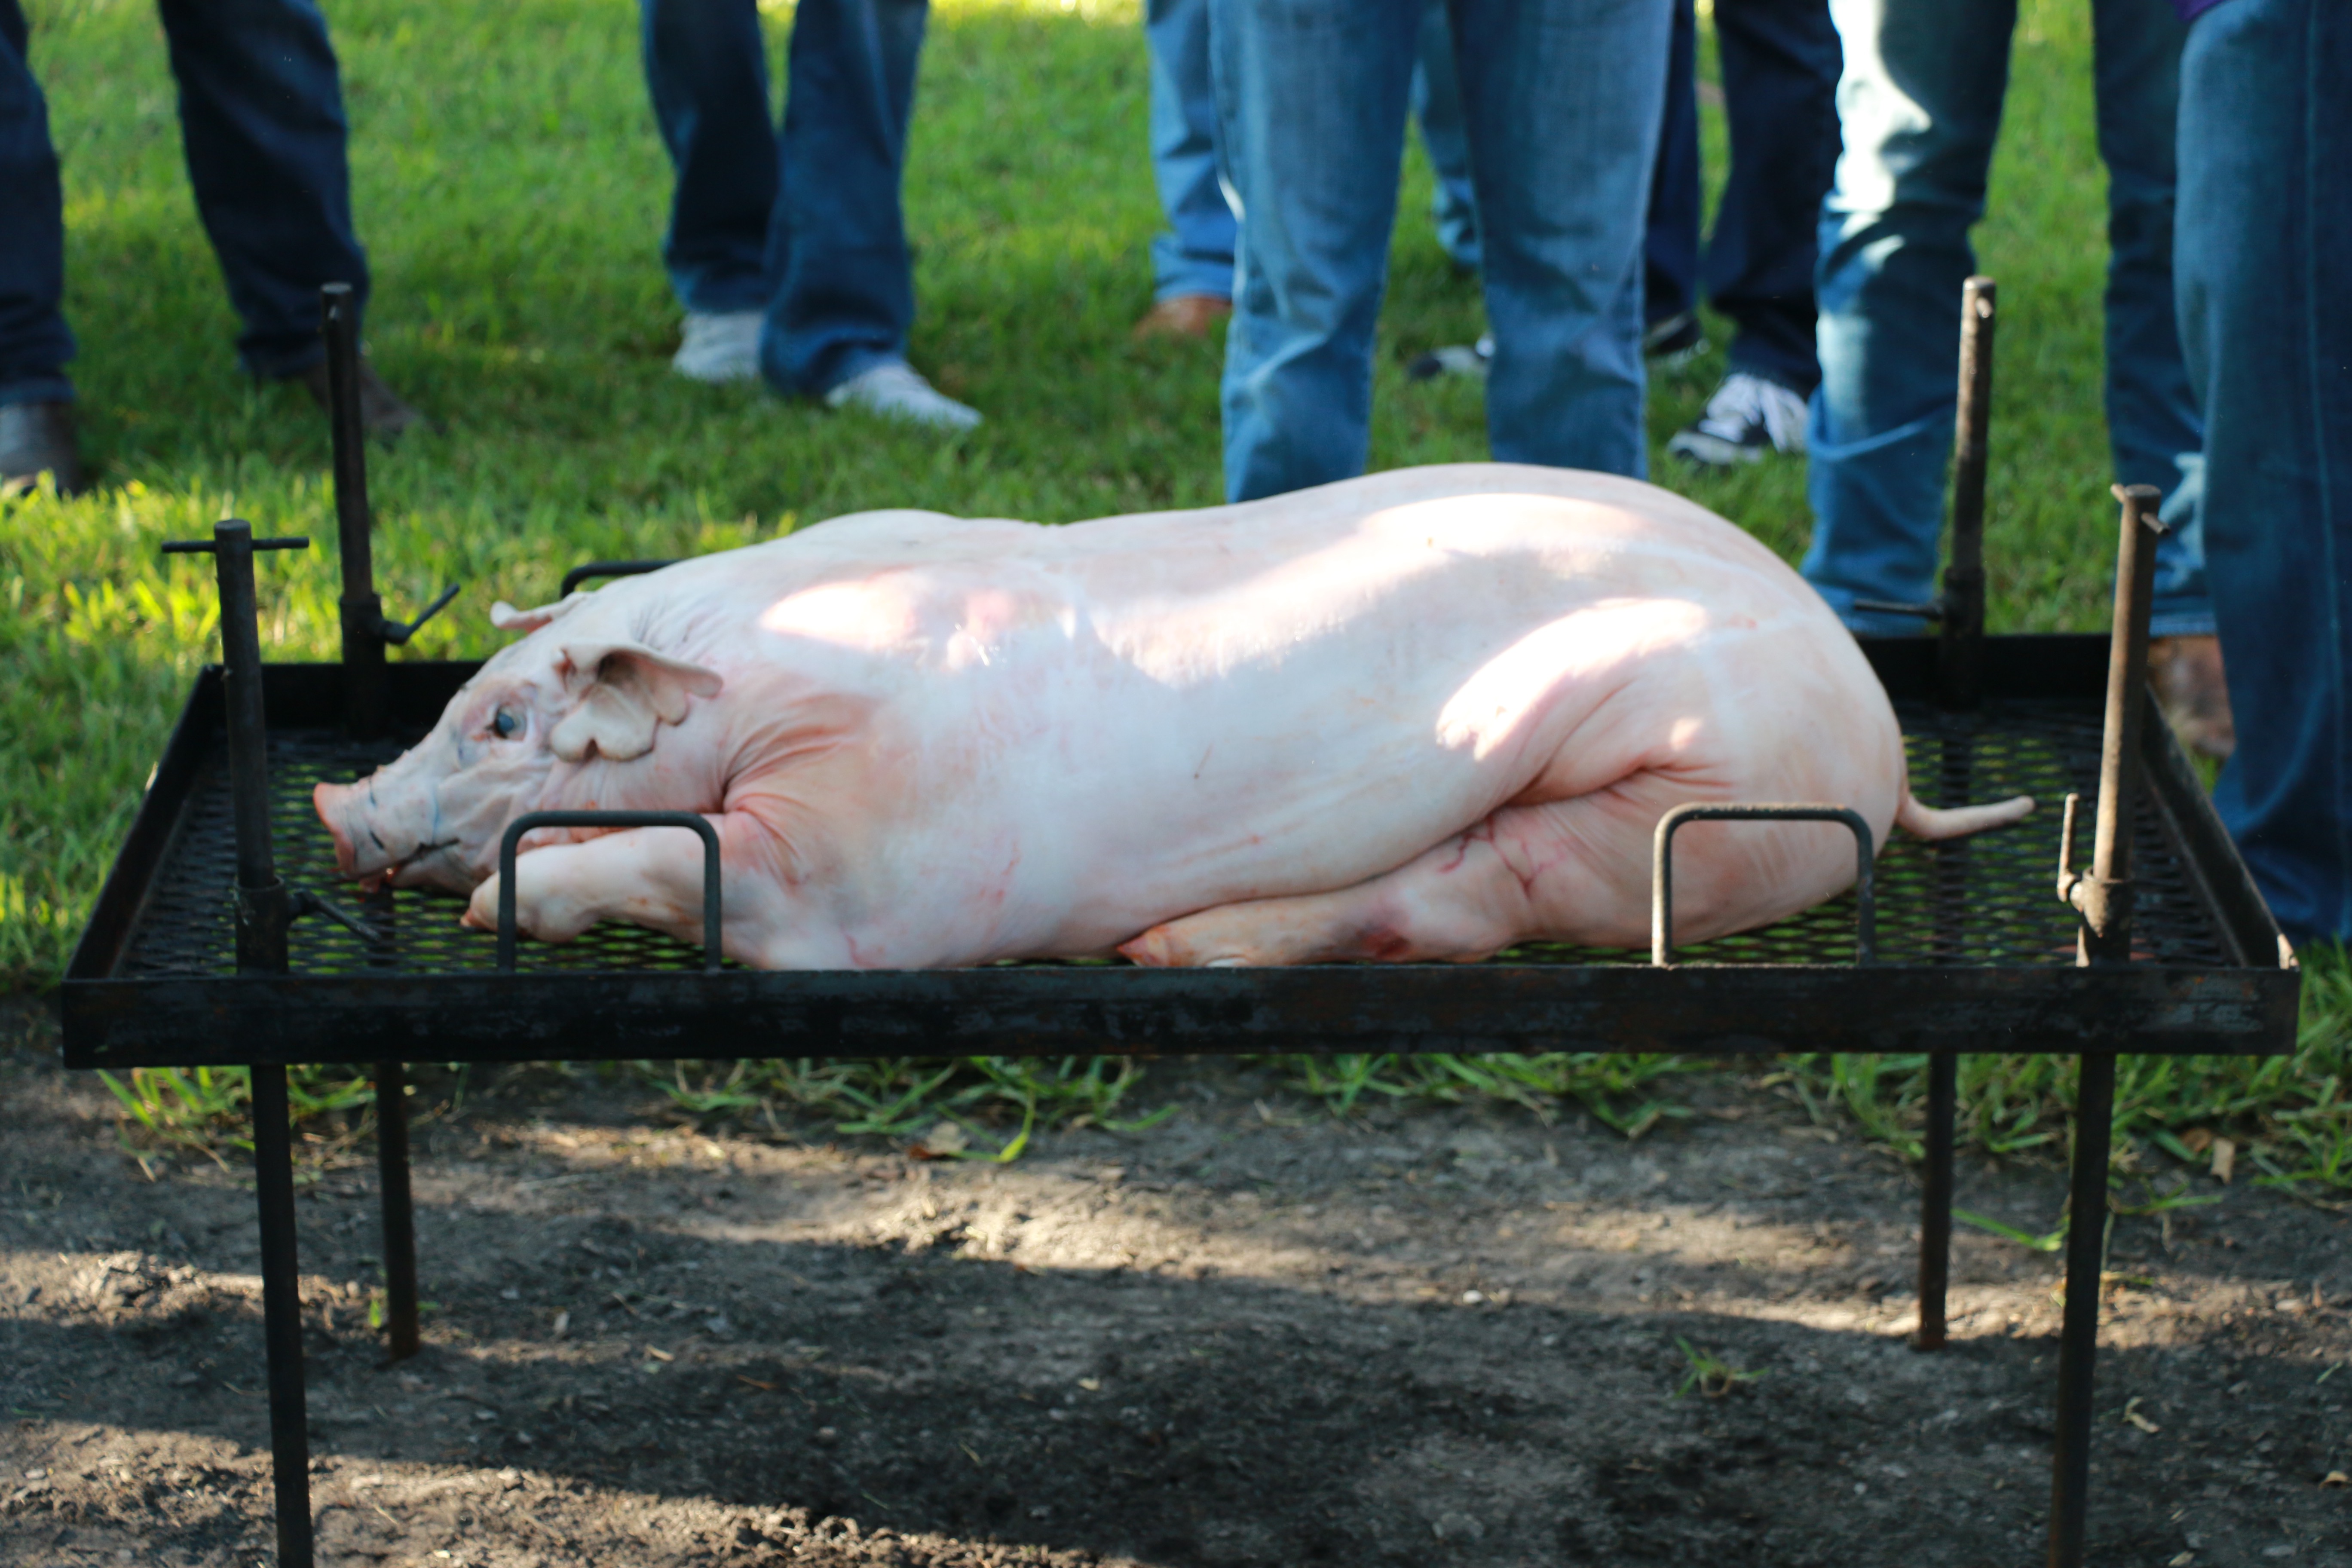 Pig on grate